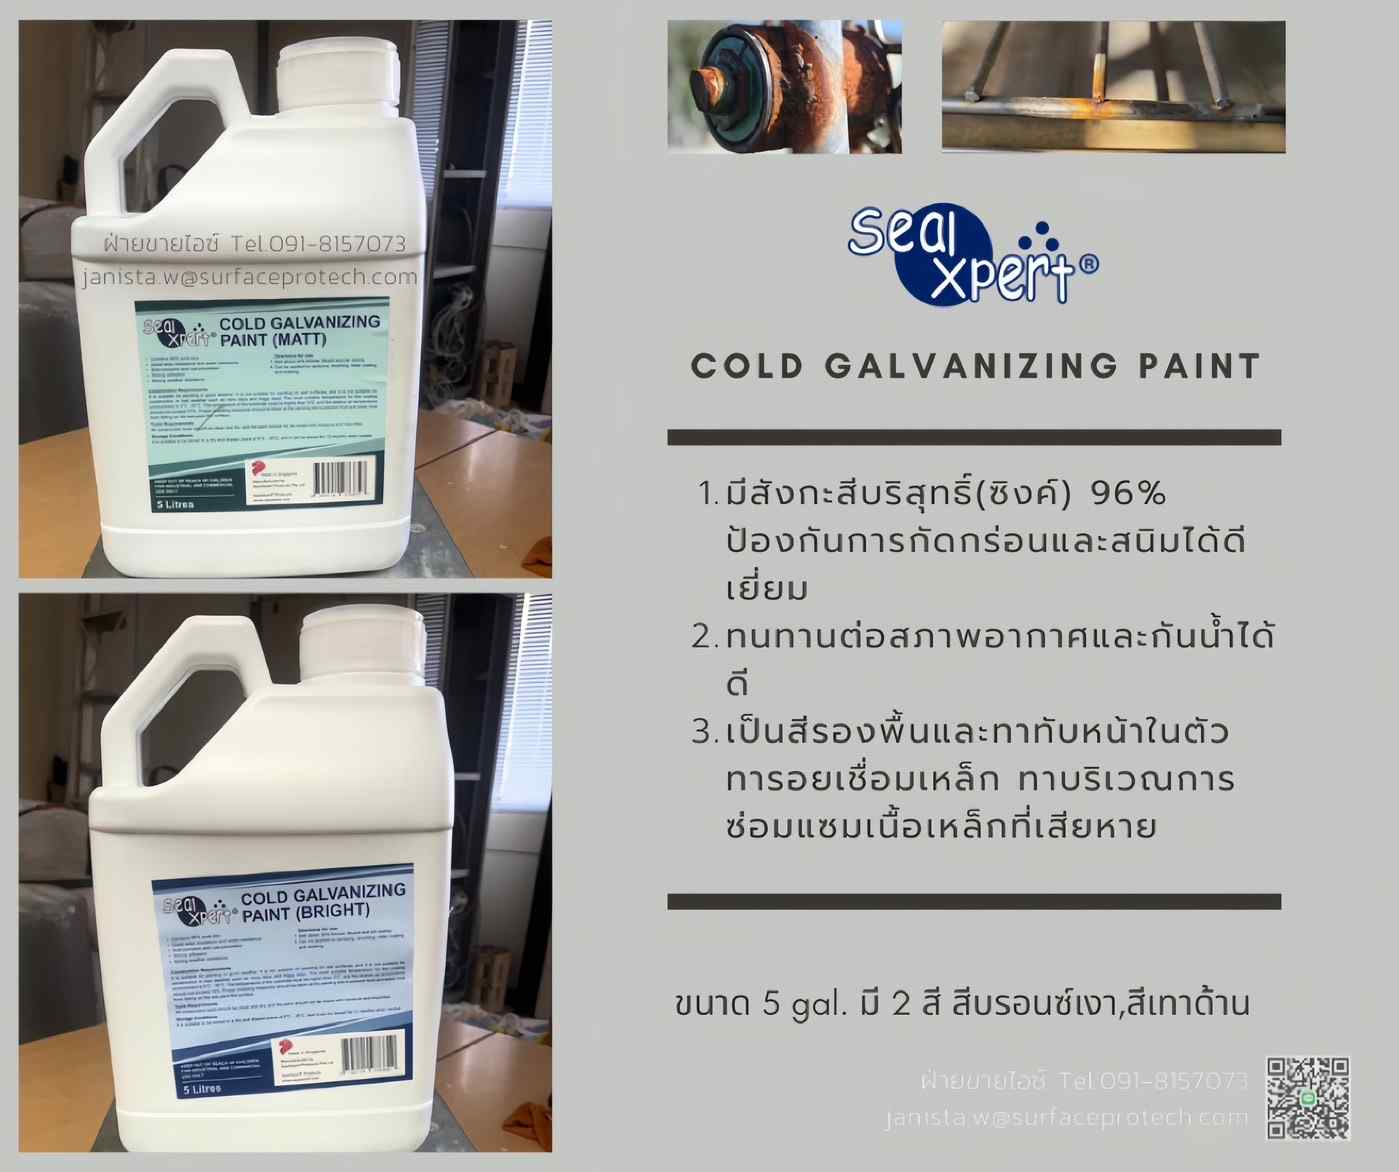 Cold Galvanizing Paint 96% สีโคลด์กัลวาไนซ์ ทาเก็บรอยเชื่อม ยับยั้งสนิมซ่อมผิวโลหะ-ติดต่อฝ่ายขาย(ไอซ์)0918157073ค่ะ